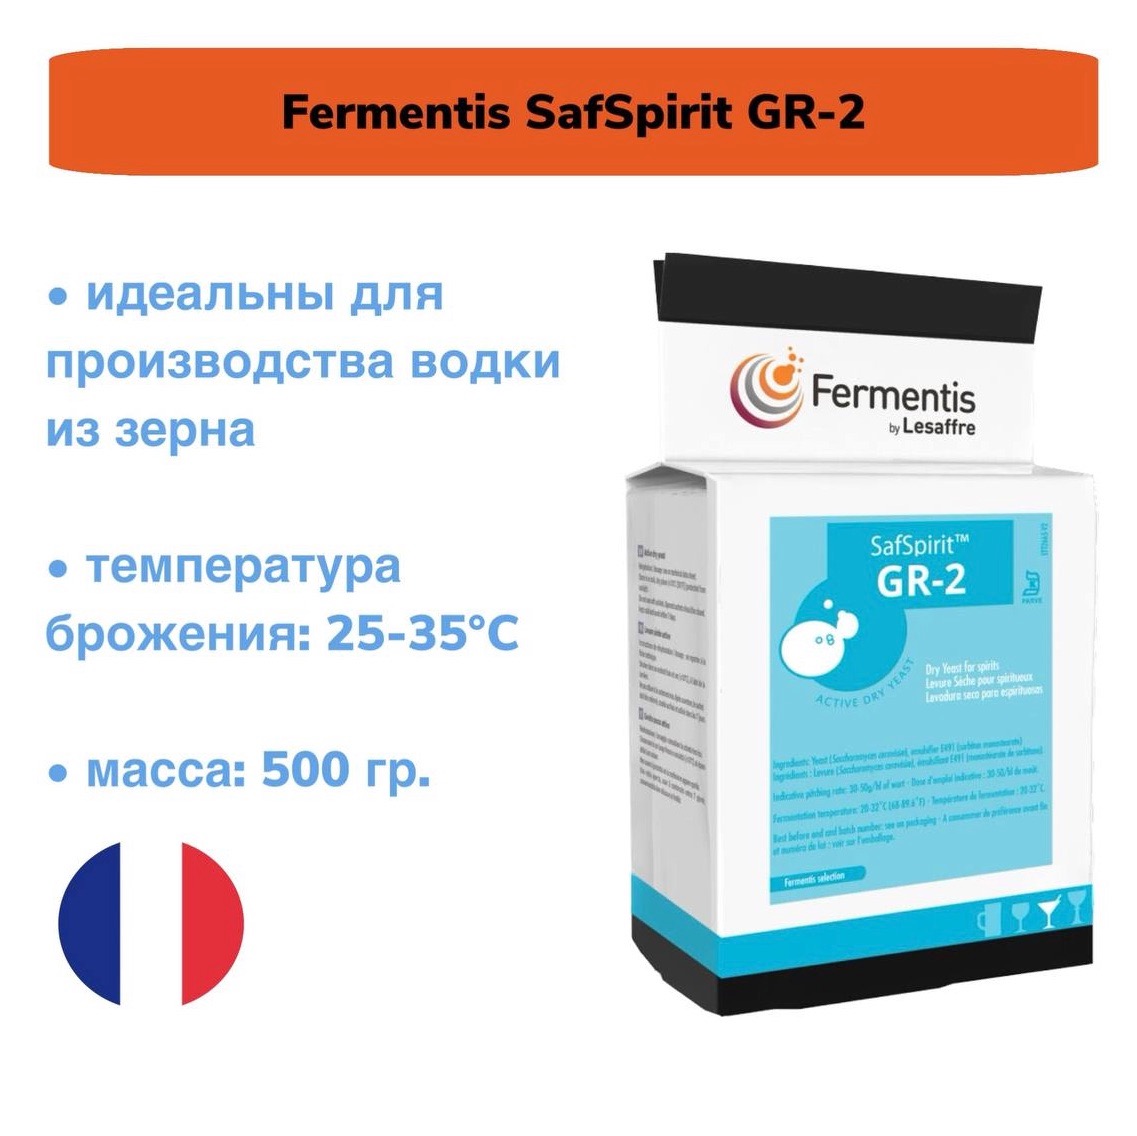 Дрожжи для зерновых культур Fermentis Safspirit GR-2, 500 гр